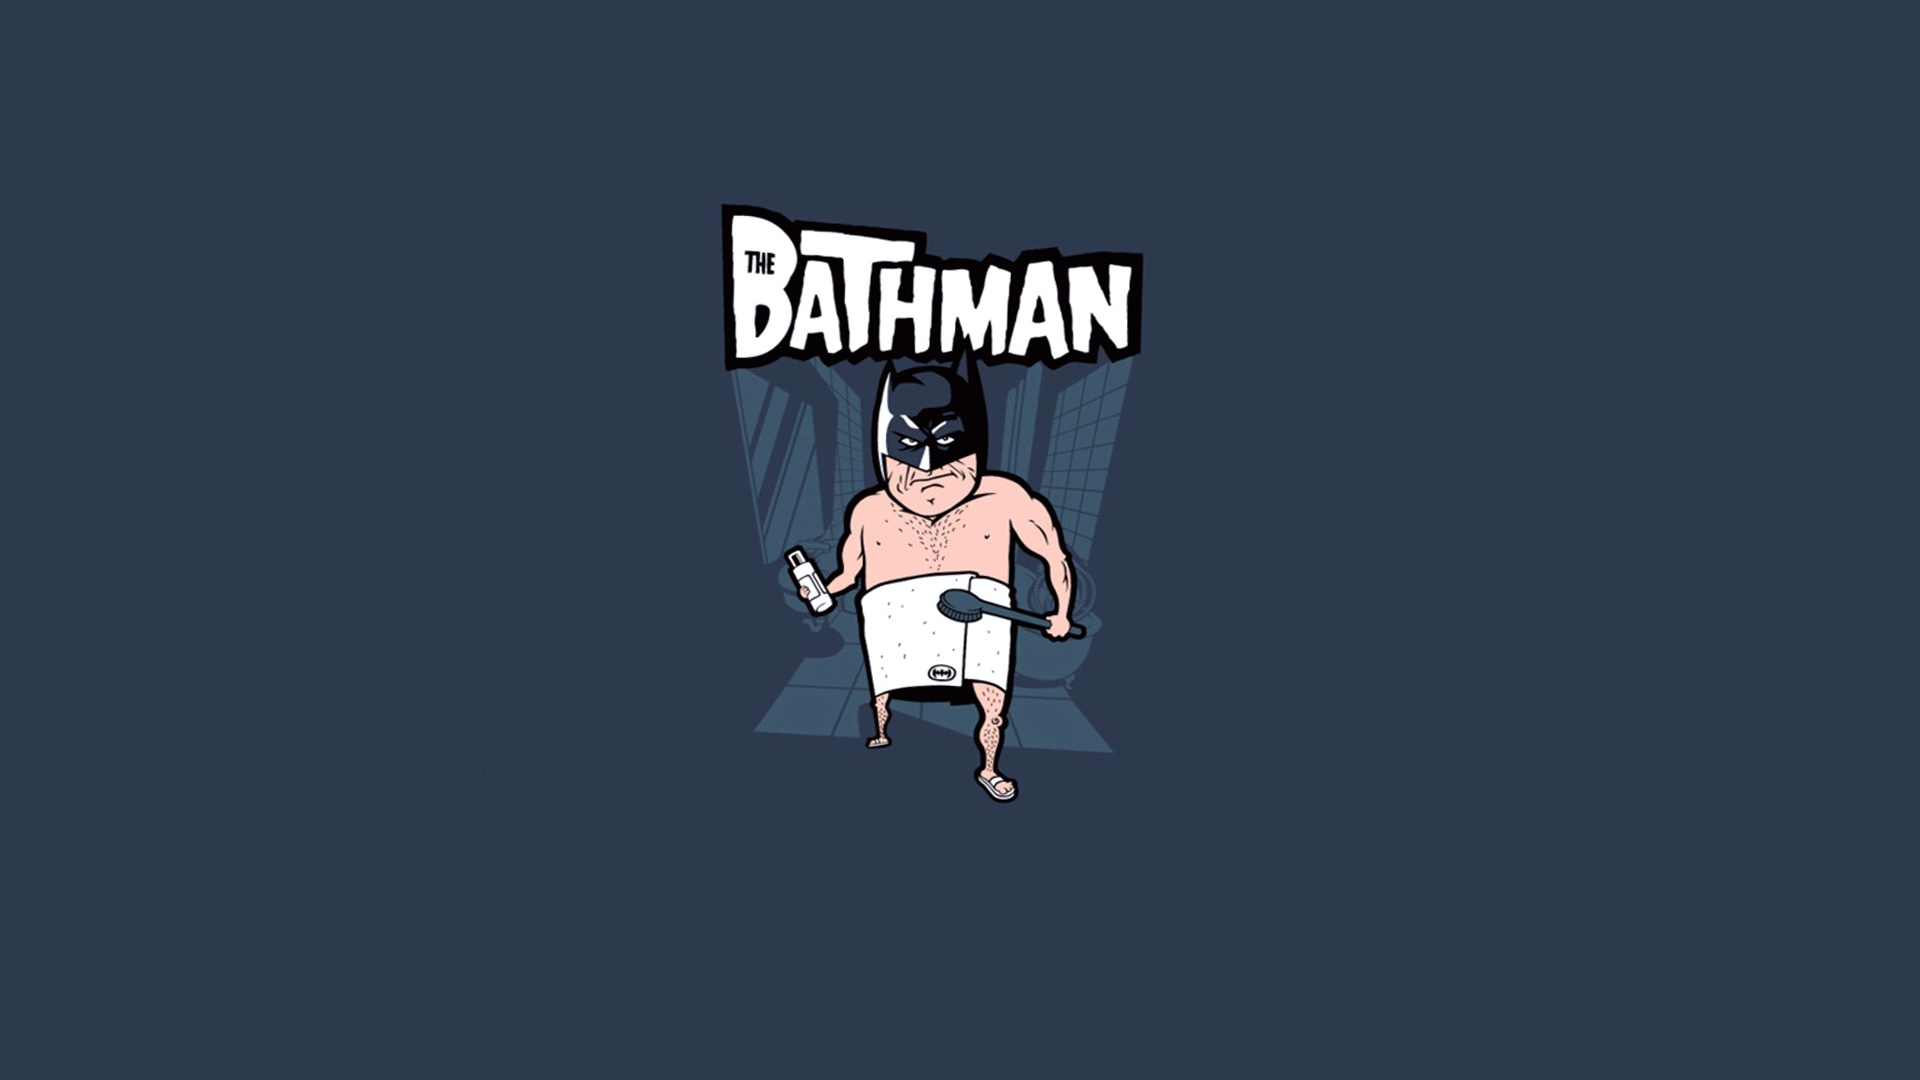 Funny Bathman Picture Wallpaper